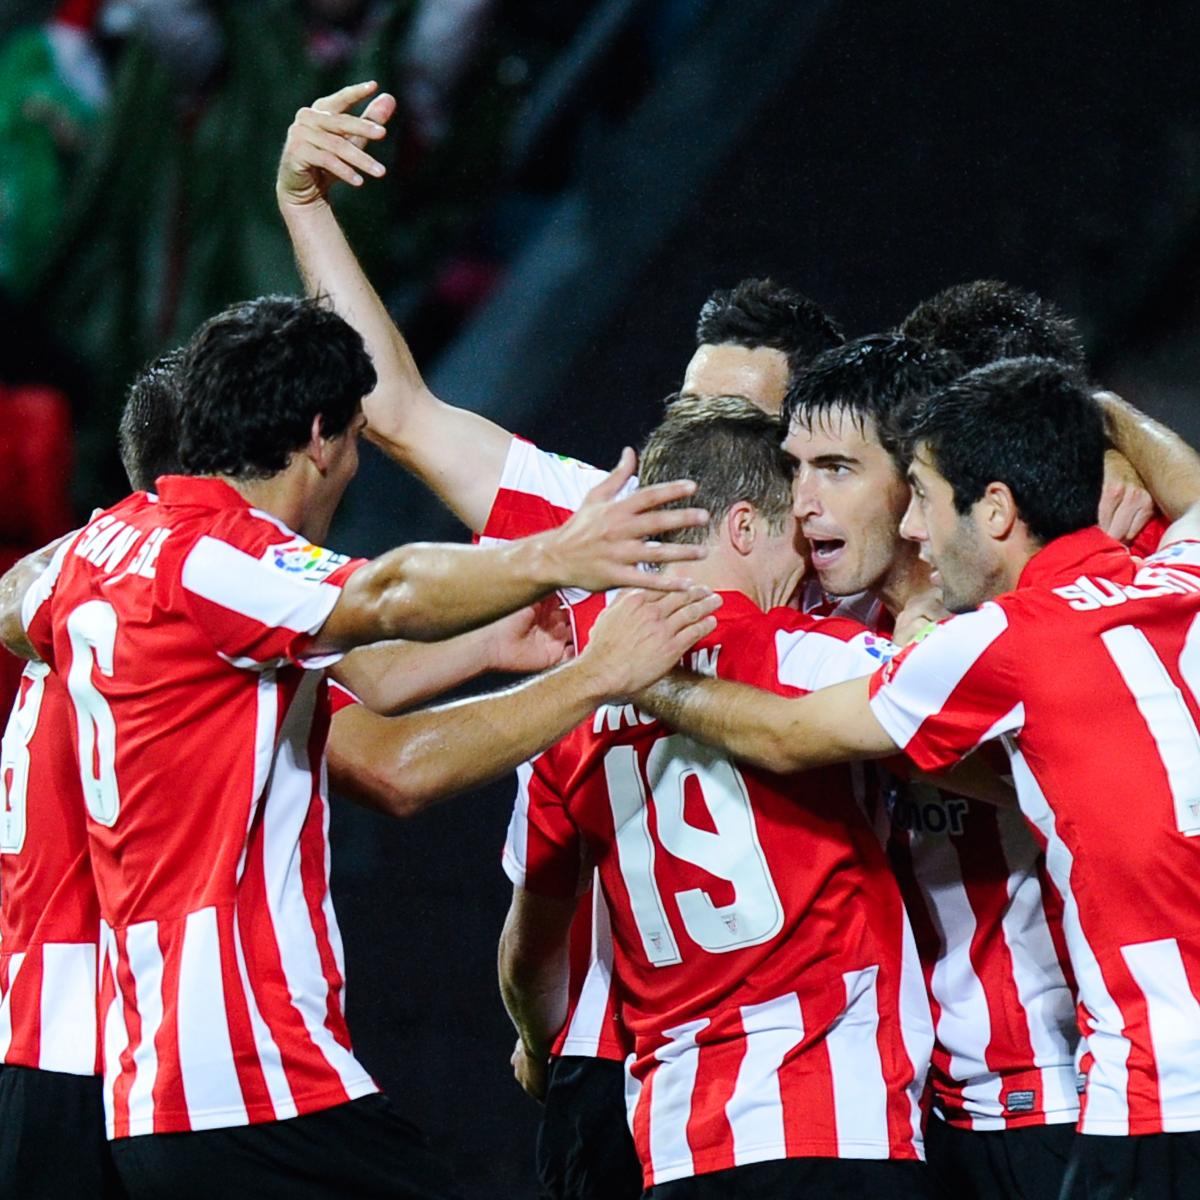 Athletic Bilbao's new away kit celebrates 'Los Leones